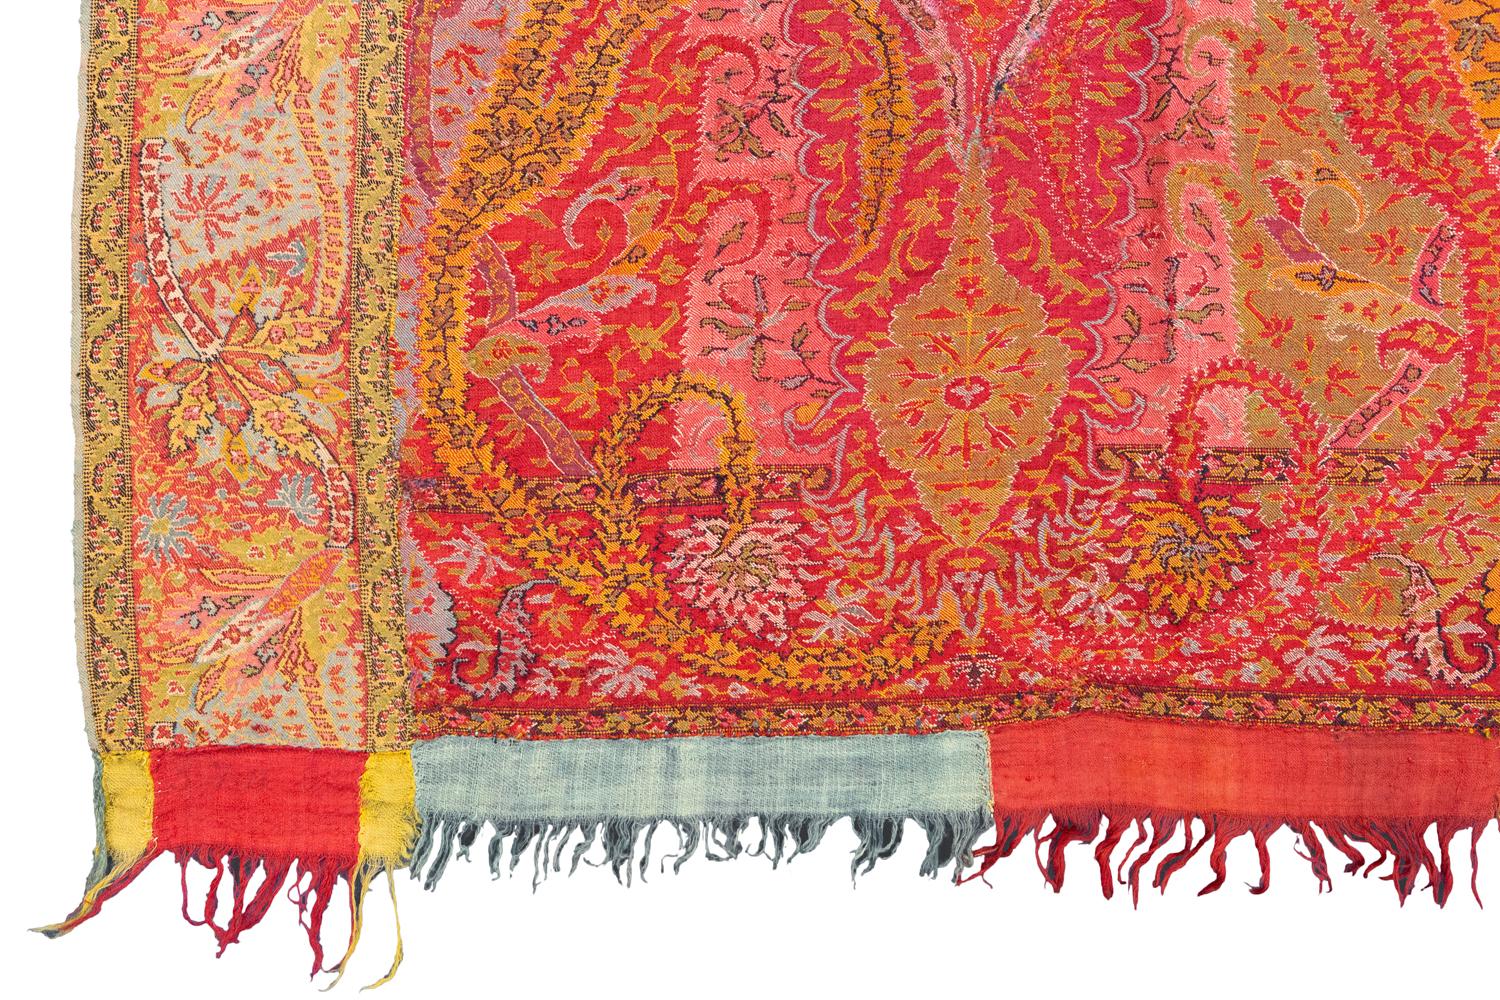 18th Century Kashmir Shawl Antique Indian Paisley And Arabesque Motifs Textile, 1800-1820 For Sale